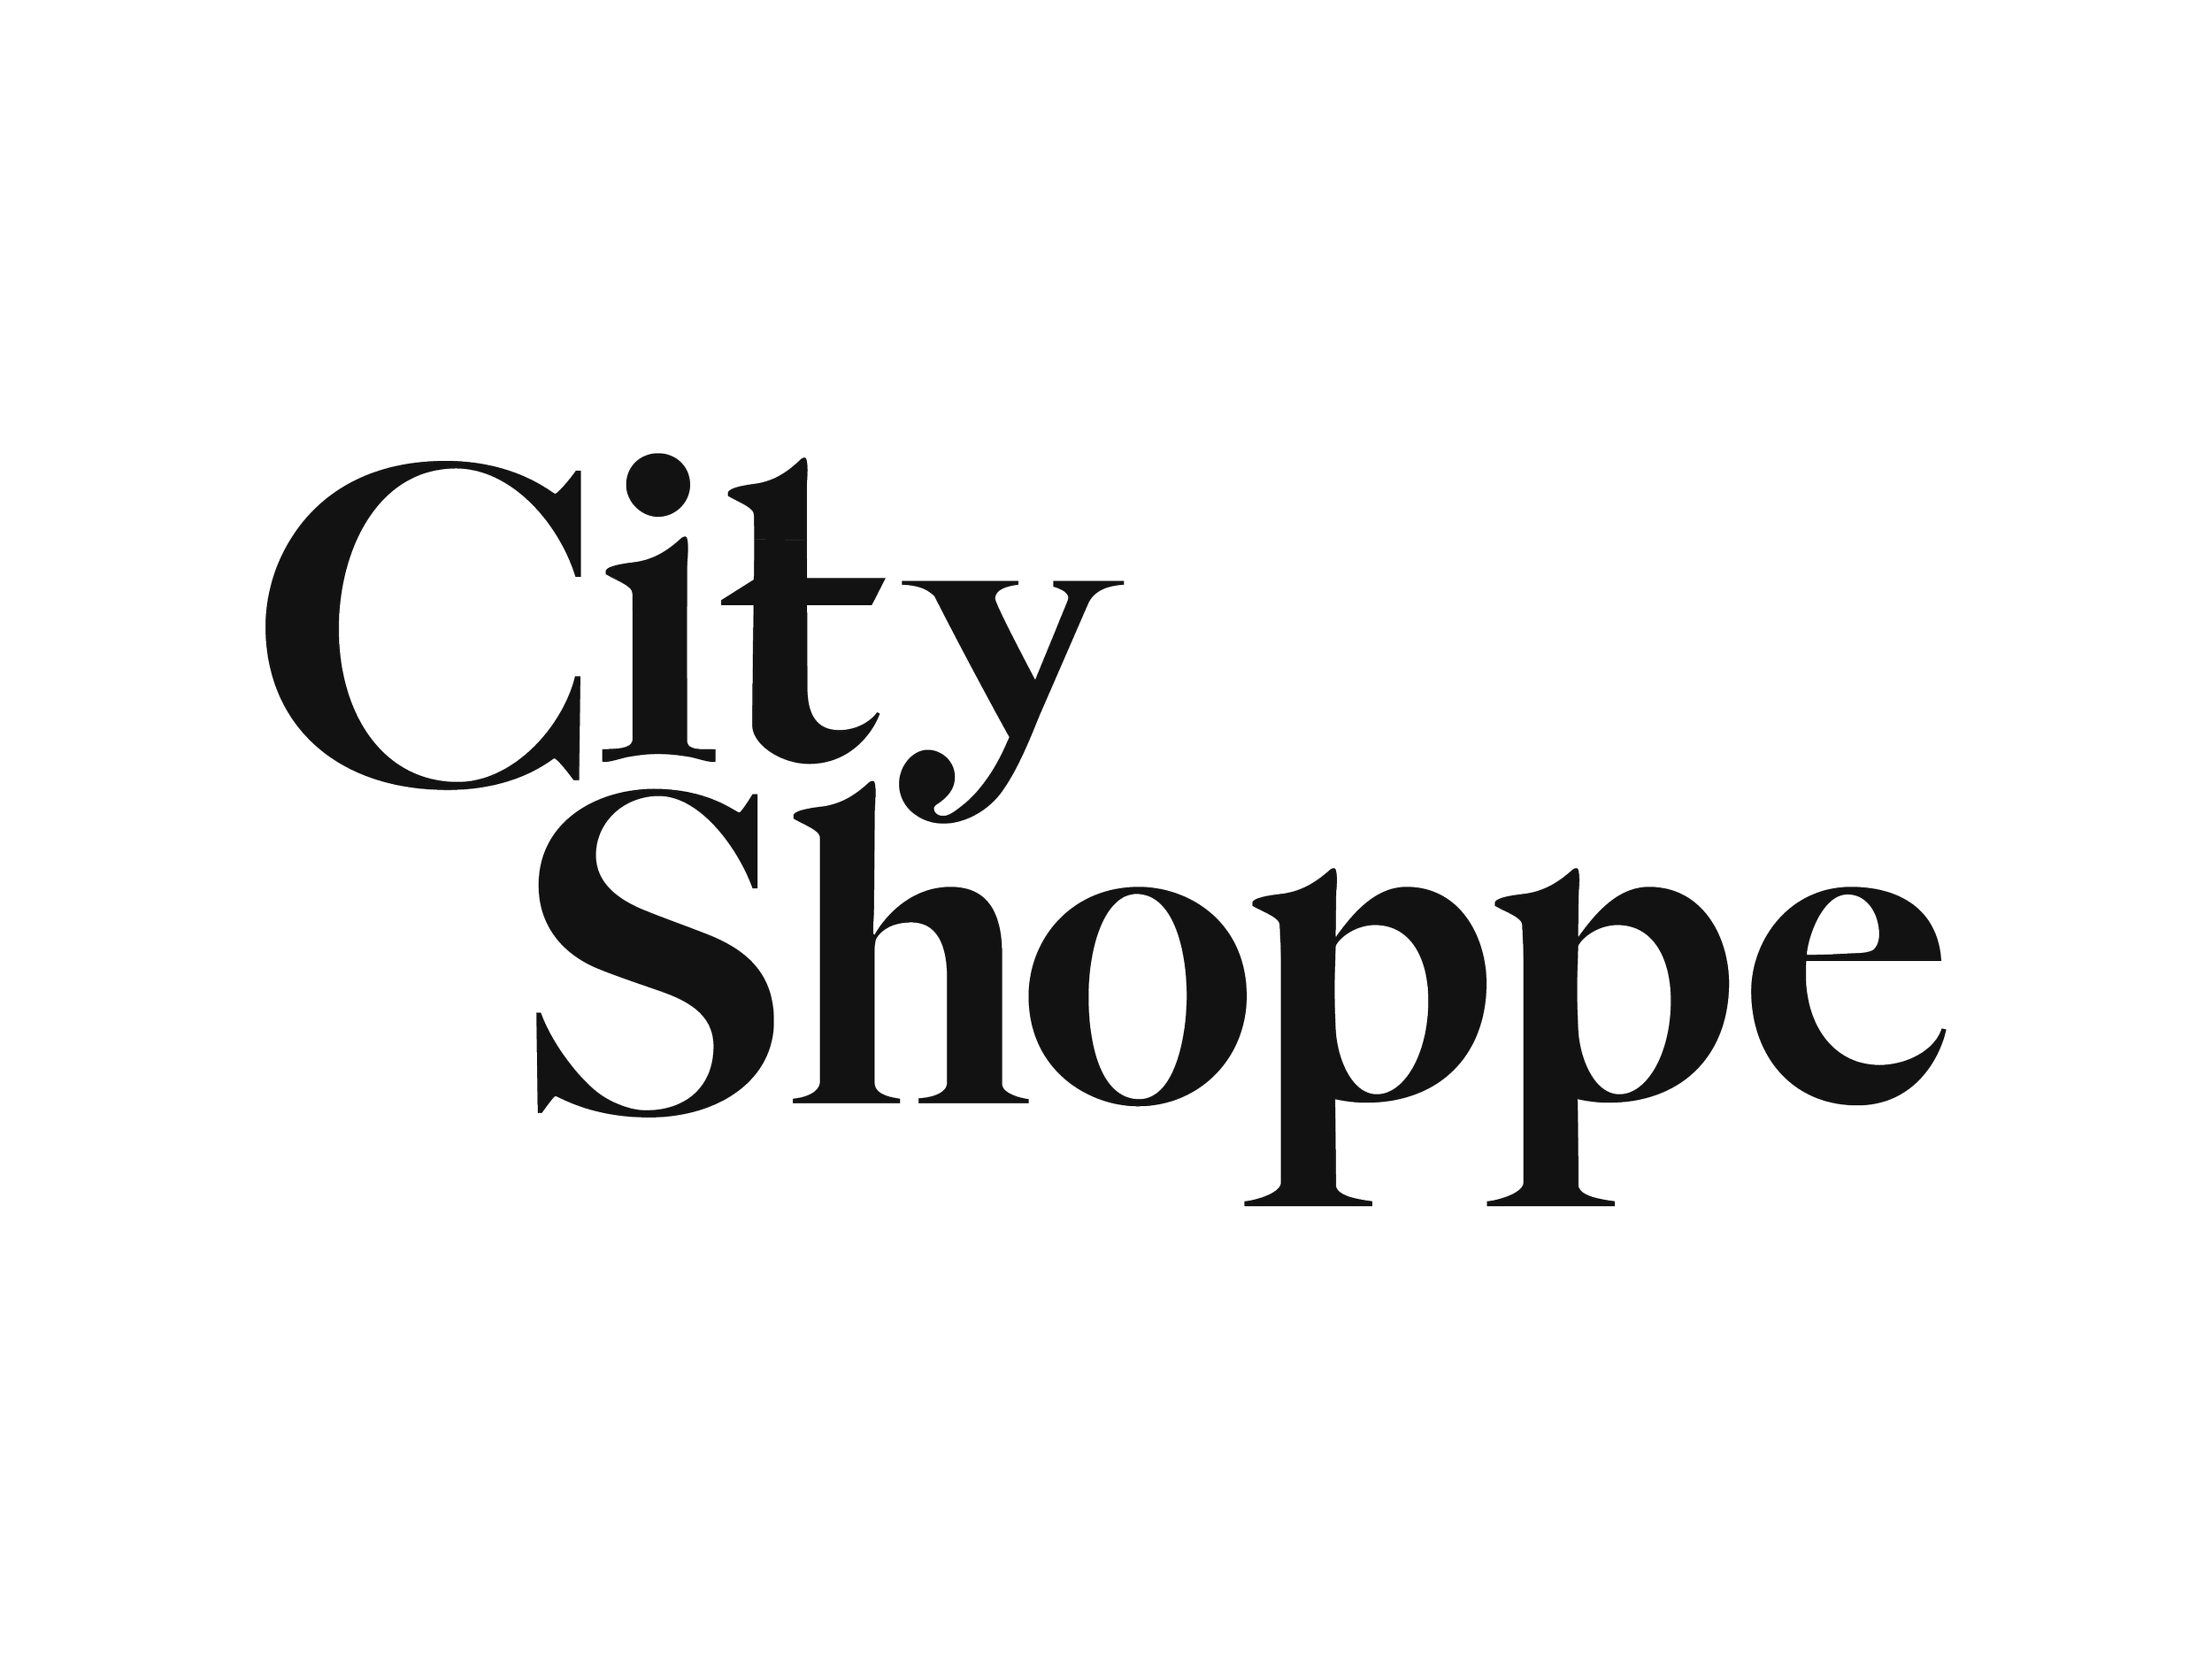 City Shoppe Wordmark.png